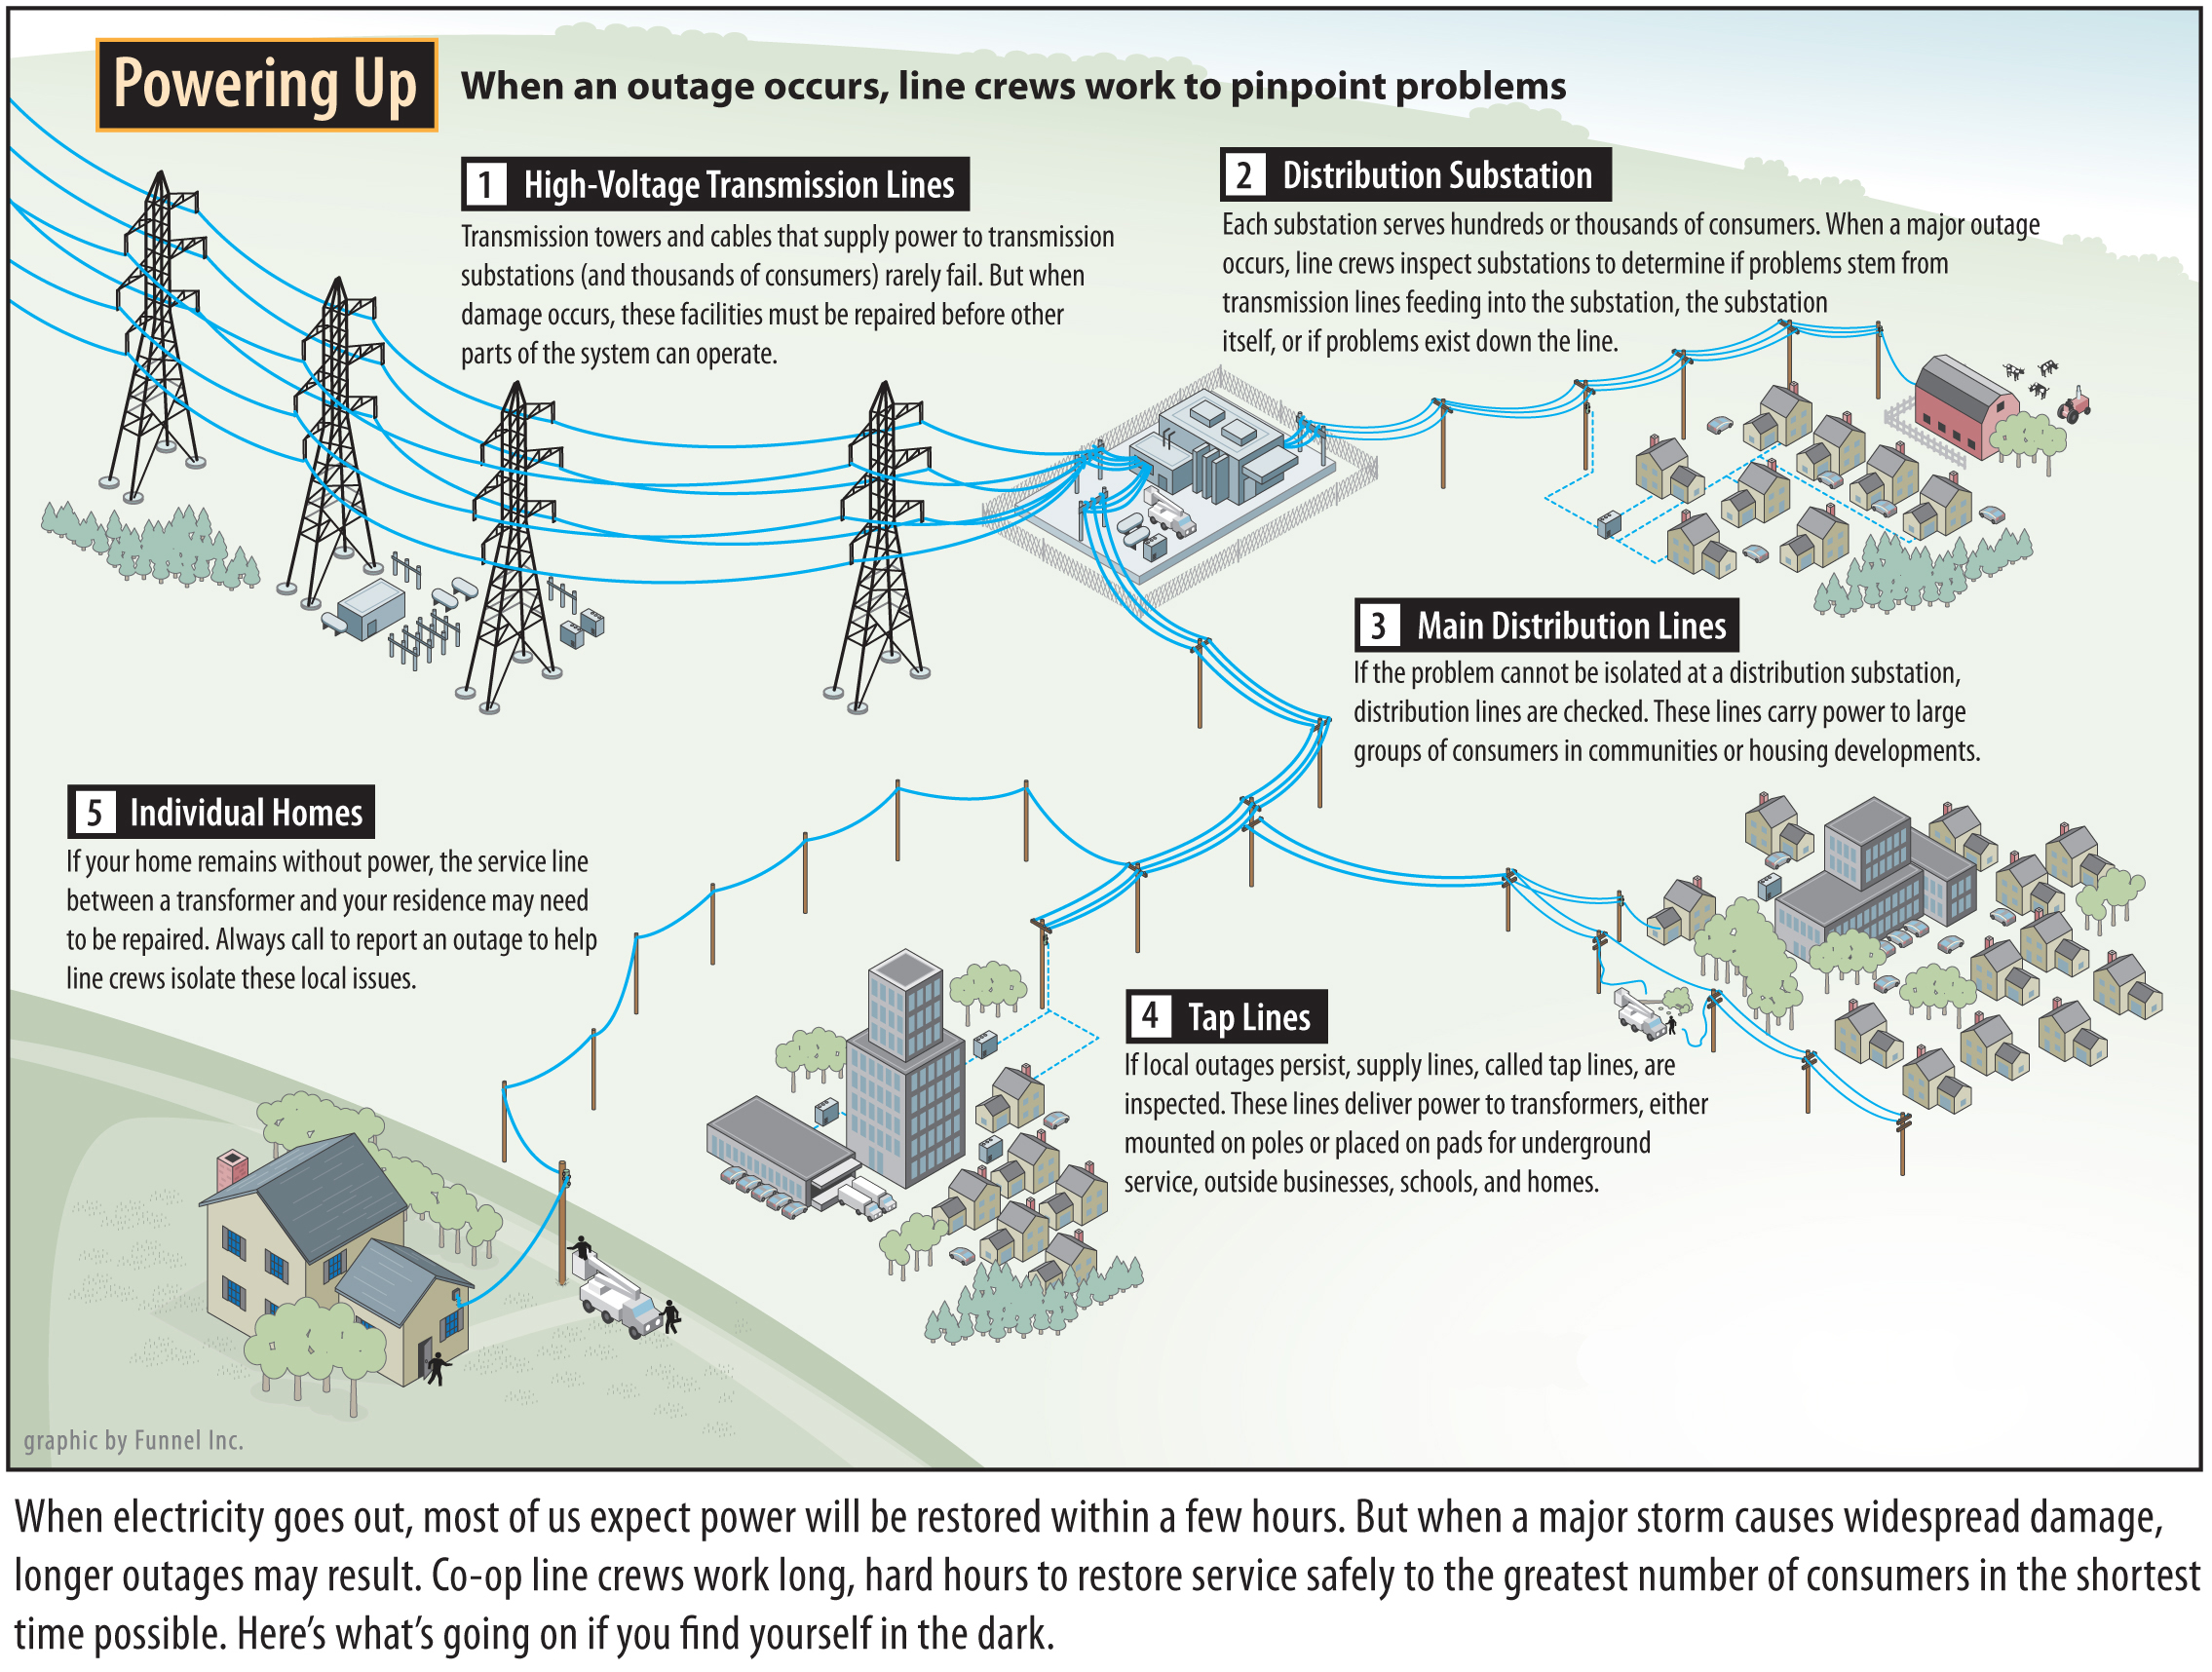 Power Restroration Graphic NRECA.jpg